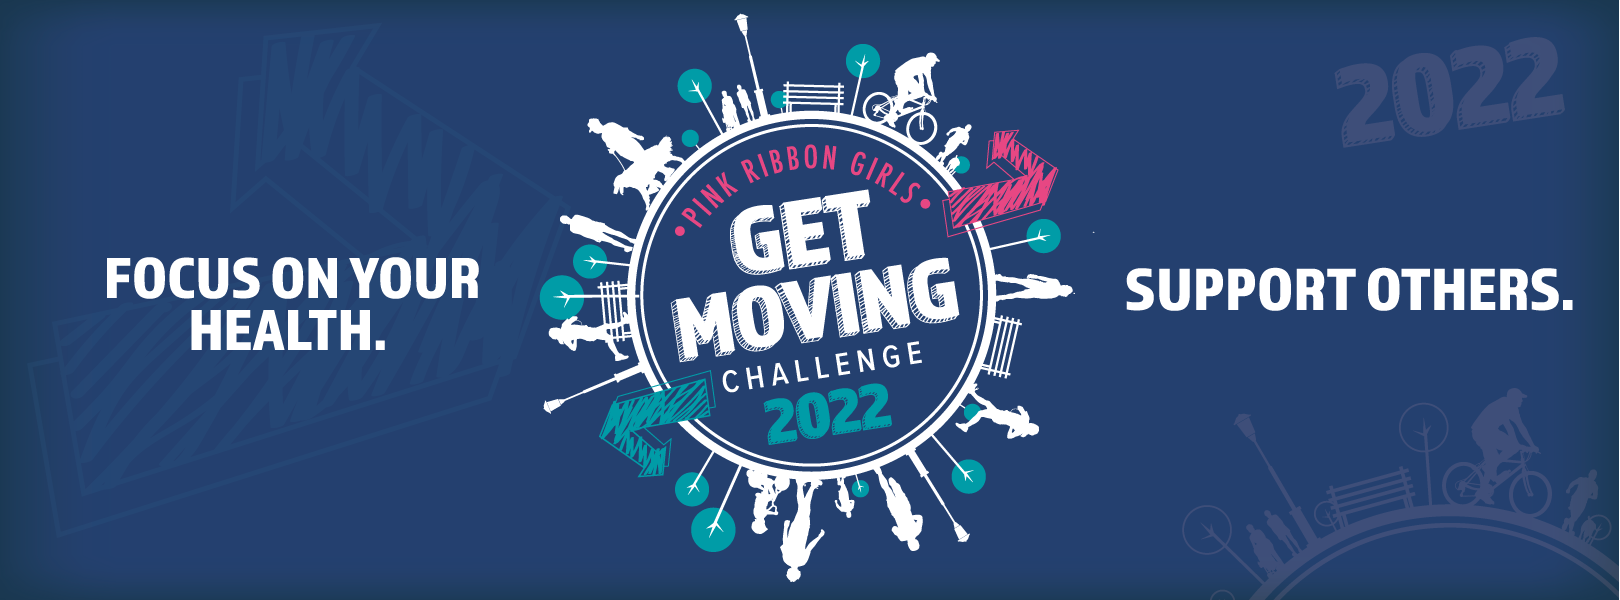 Get Moving Challenge 2022